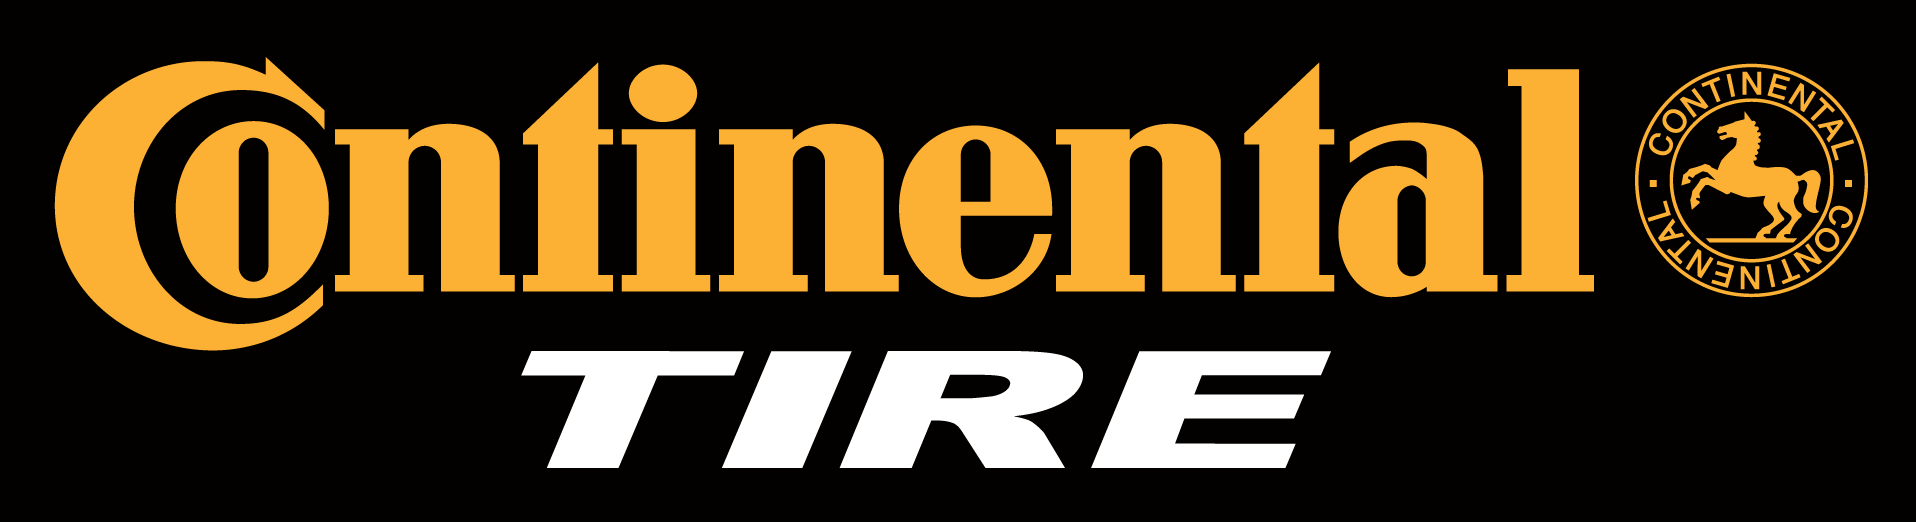 Continental Tires Logo Vector PNG - 28378